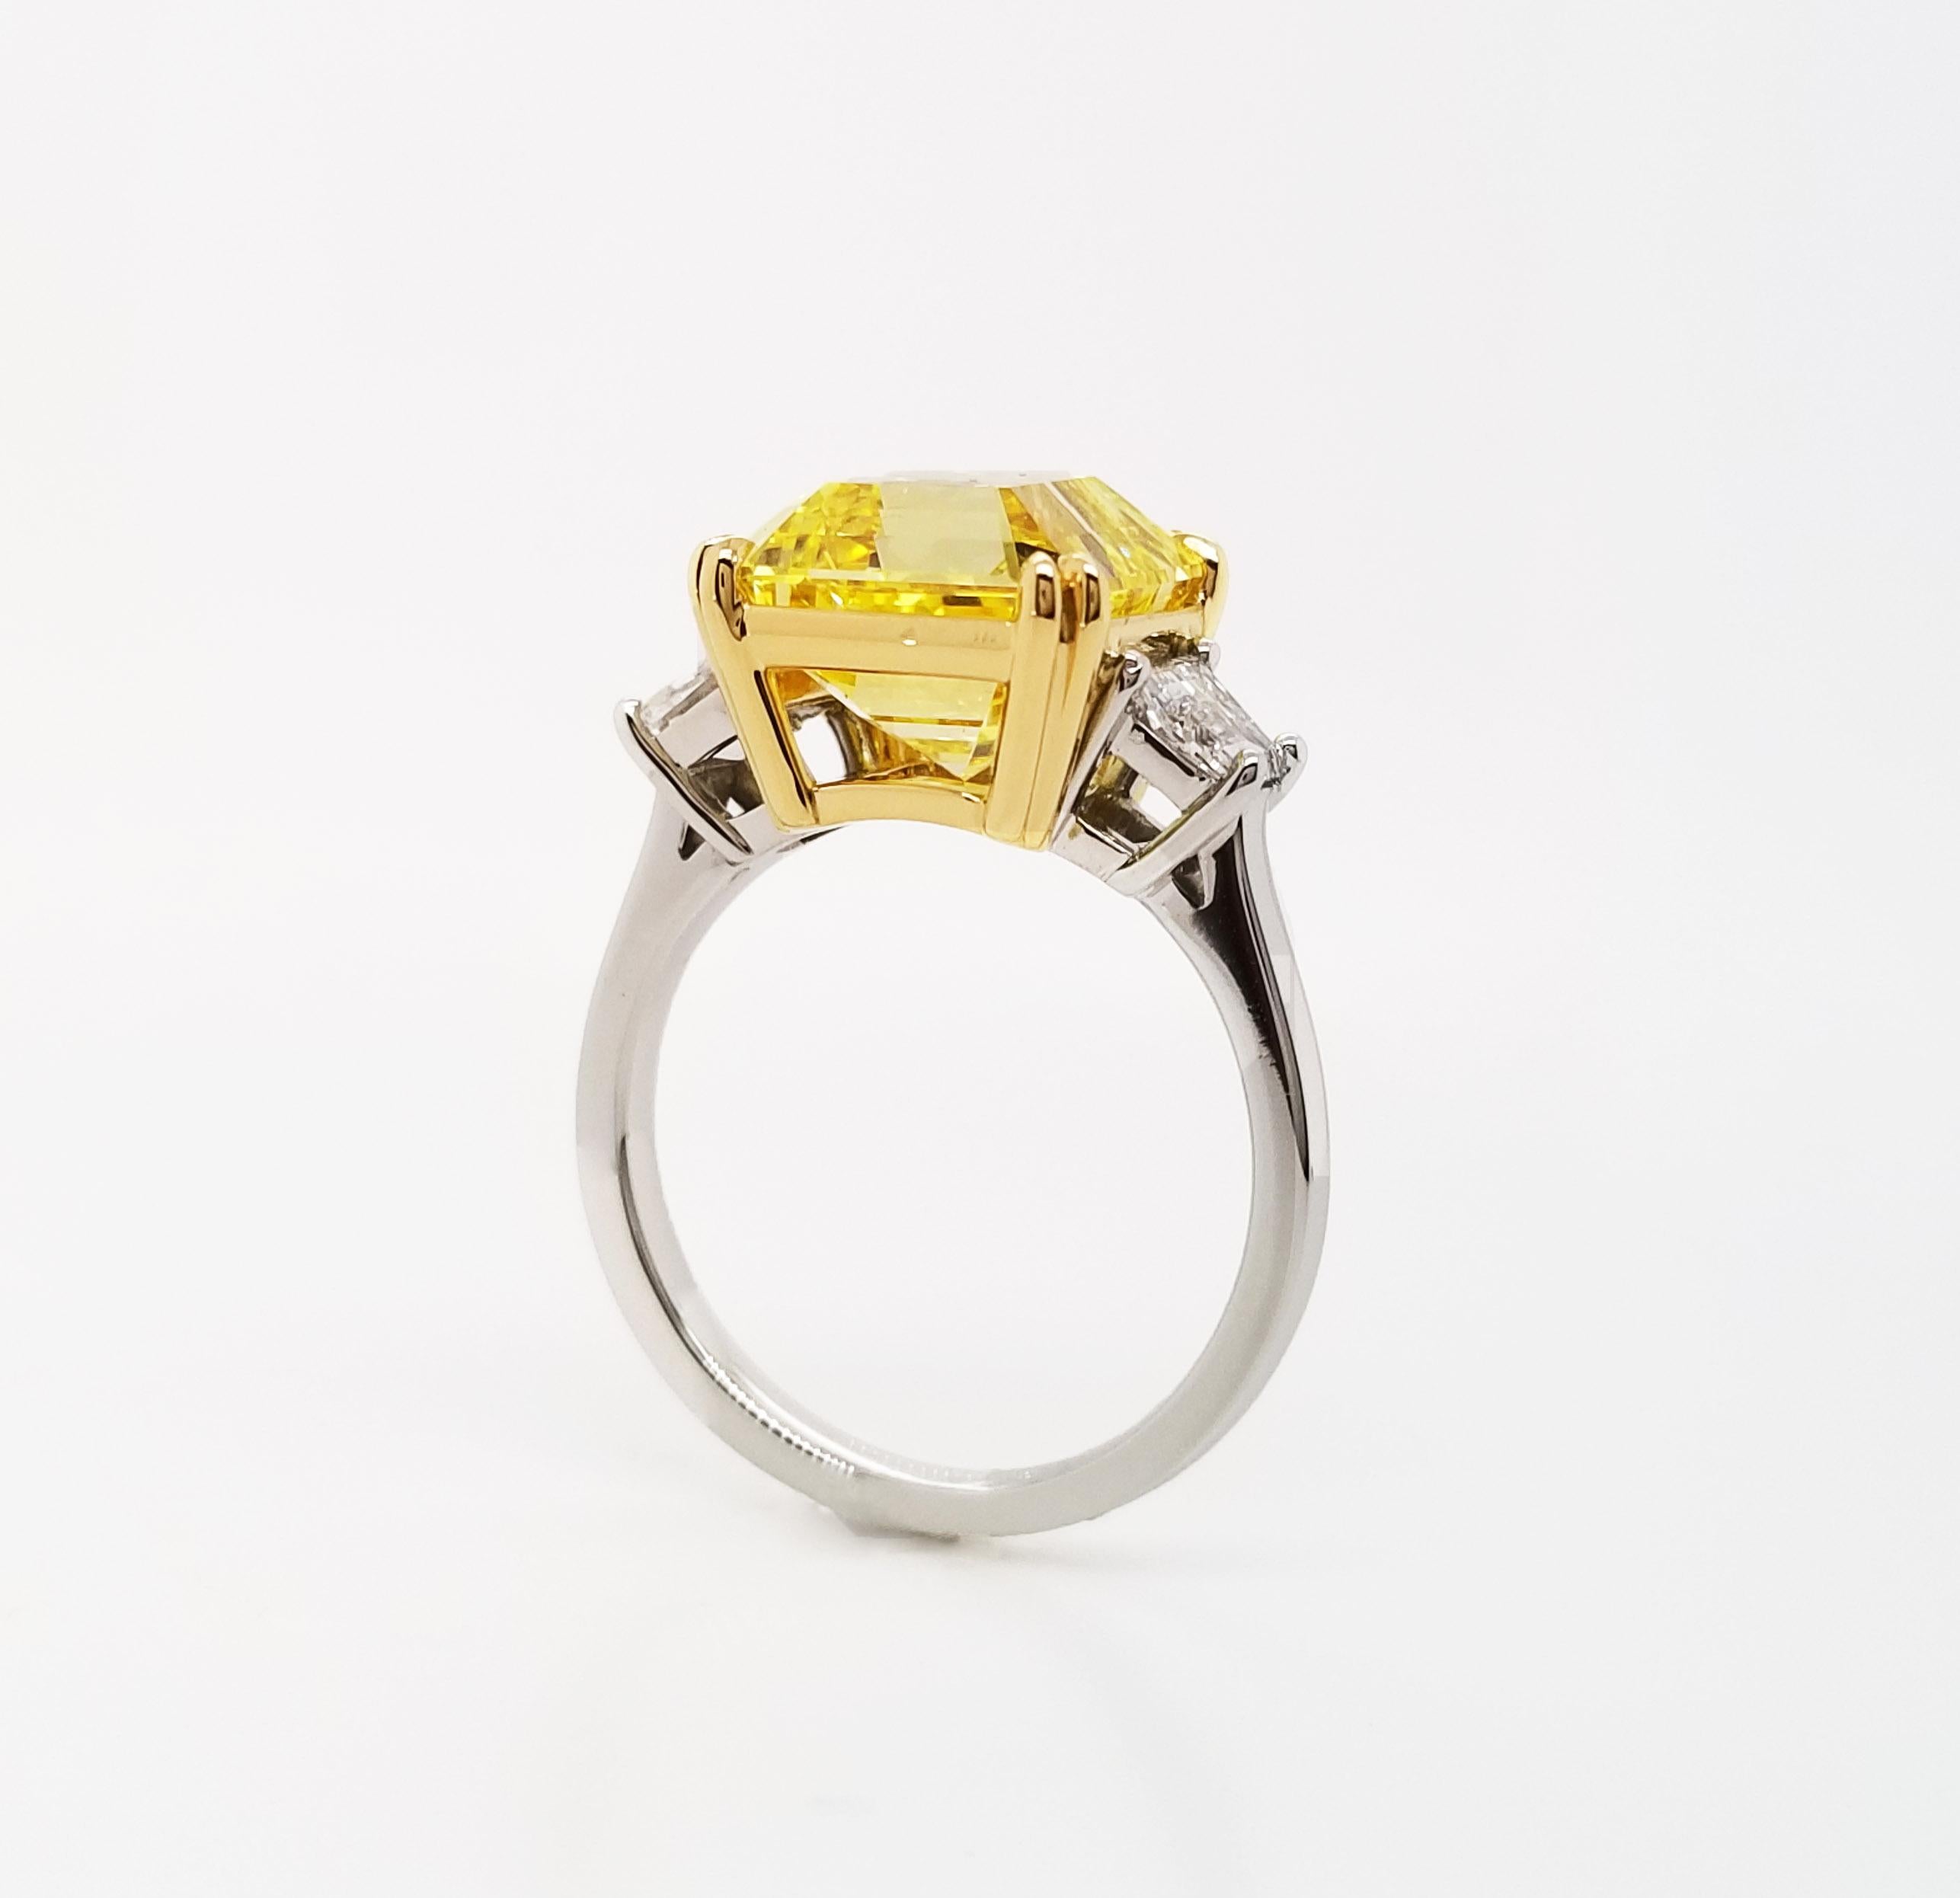 Scarselli 6 Carat Fancy Vivid Yellow Emerald Cut Diamond Ring in Platinum 1